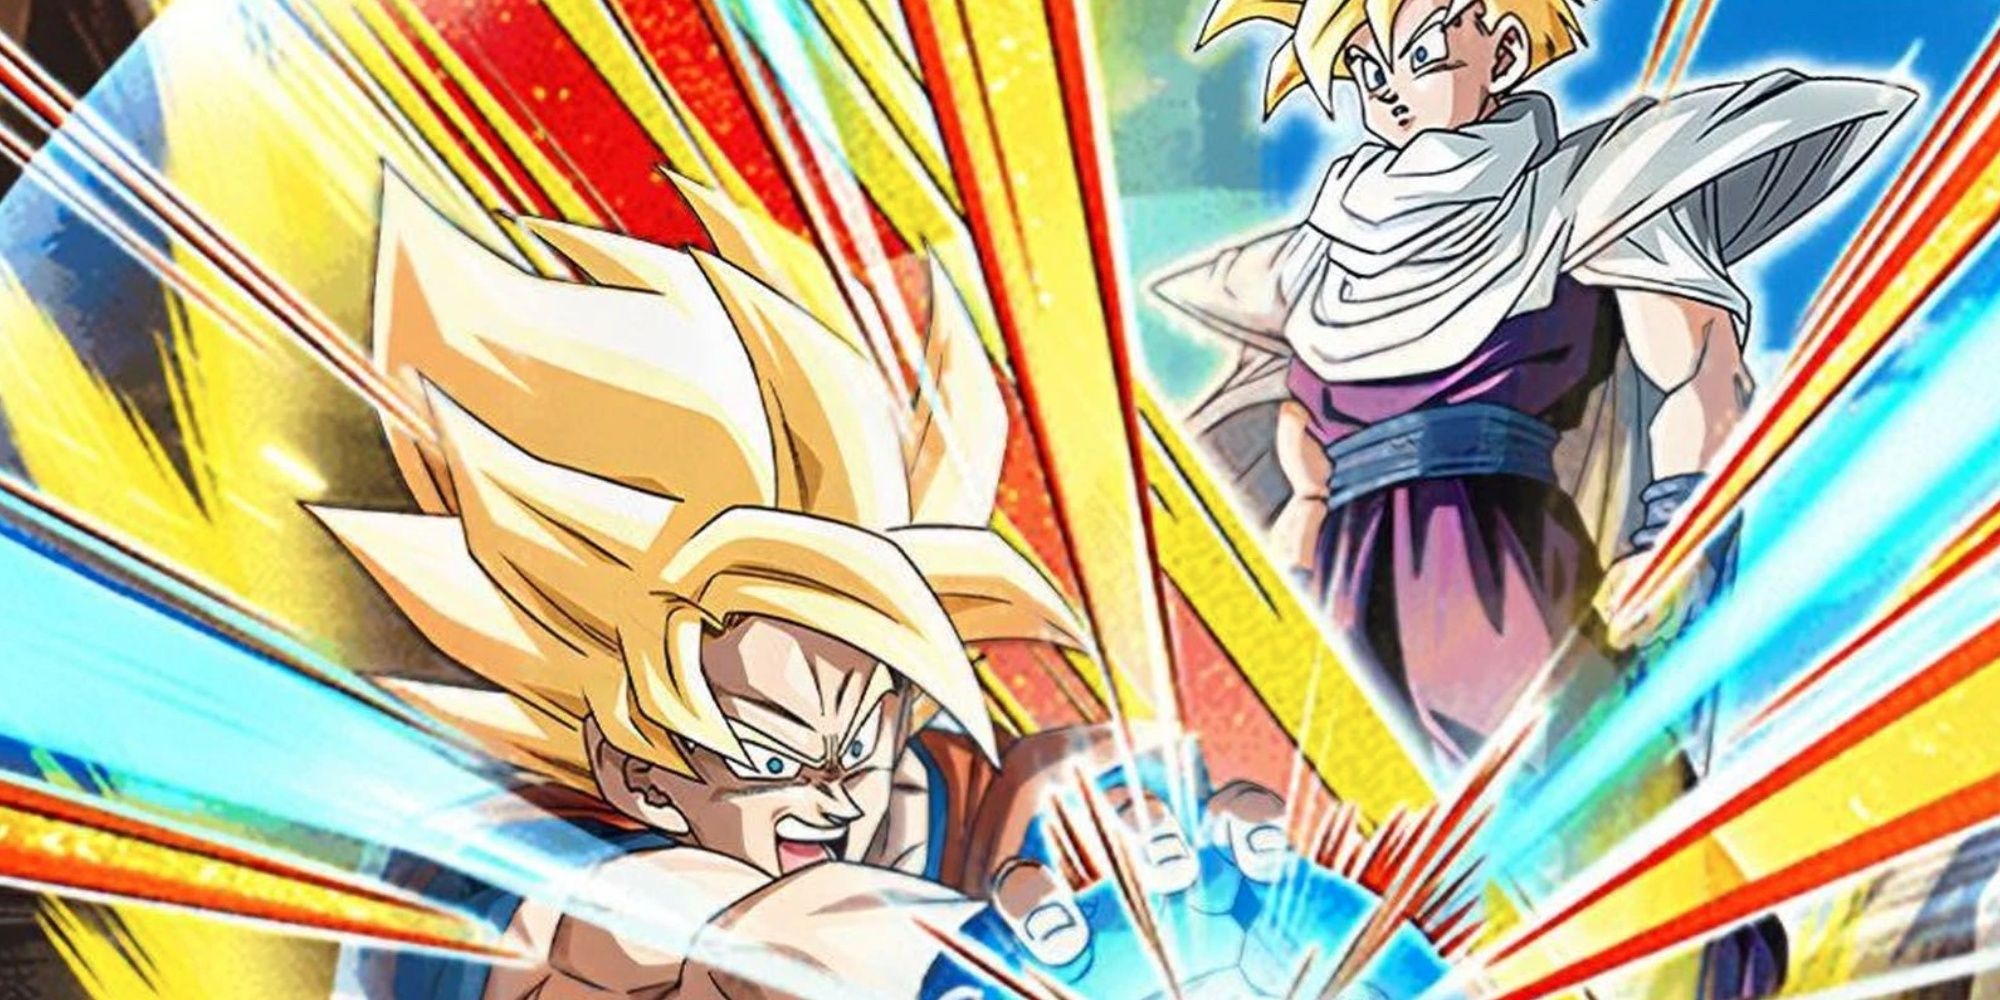 Battle to Protect Tomorrow] Super Saiyan 2 Goku